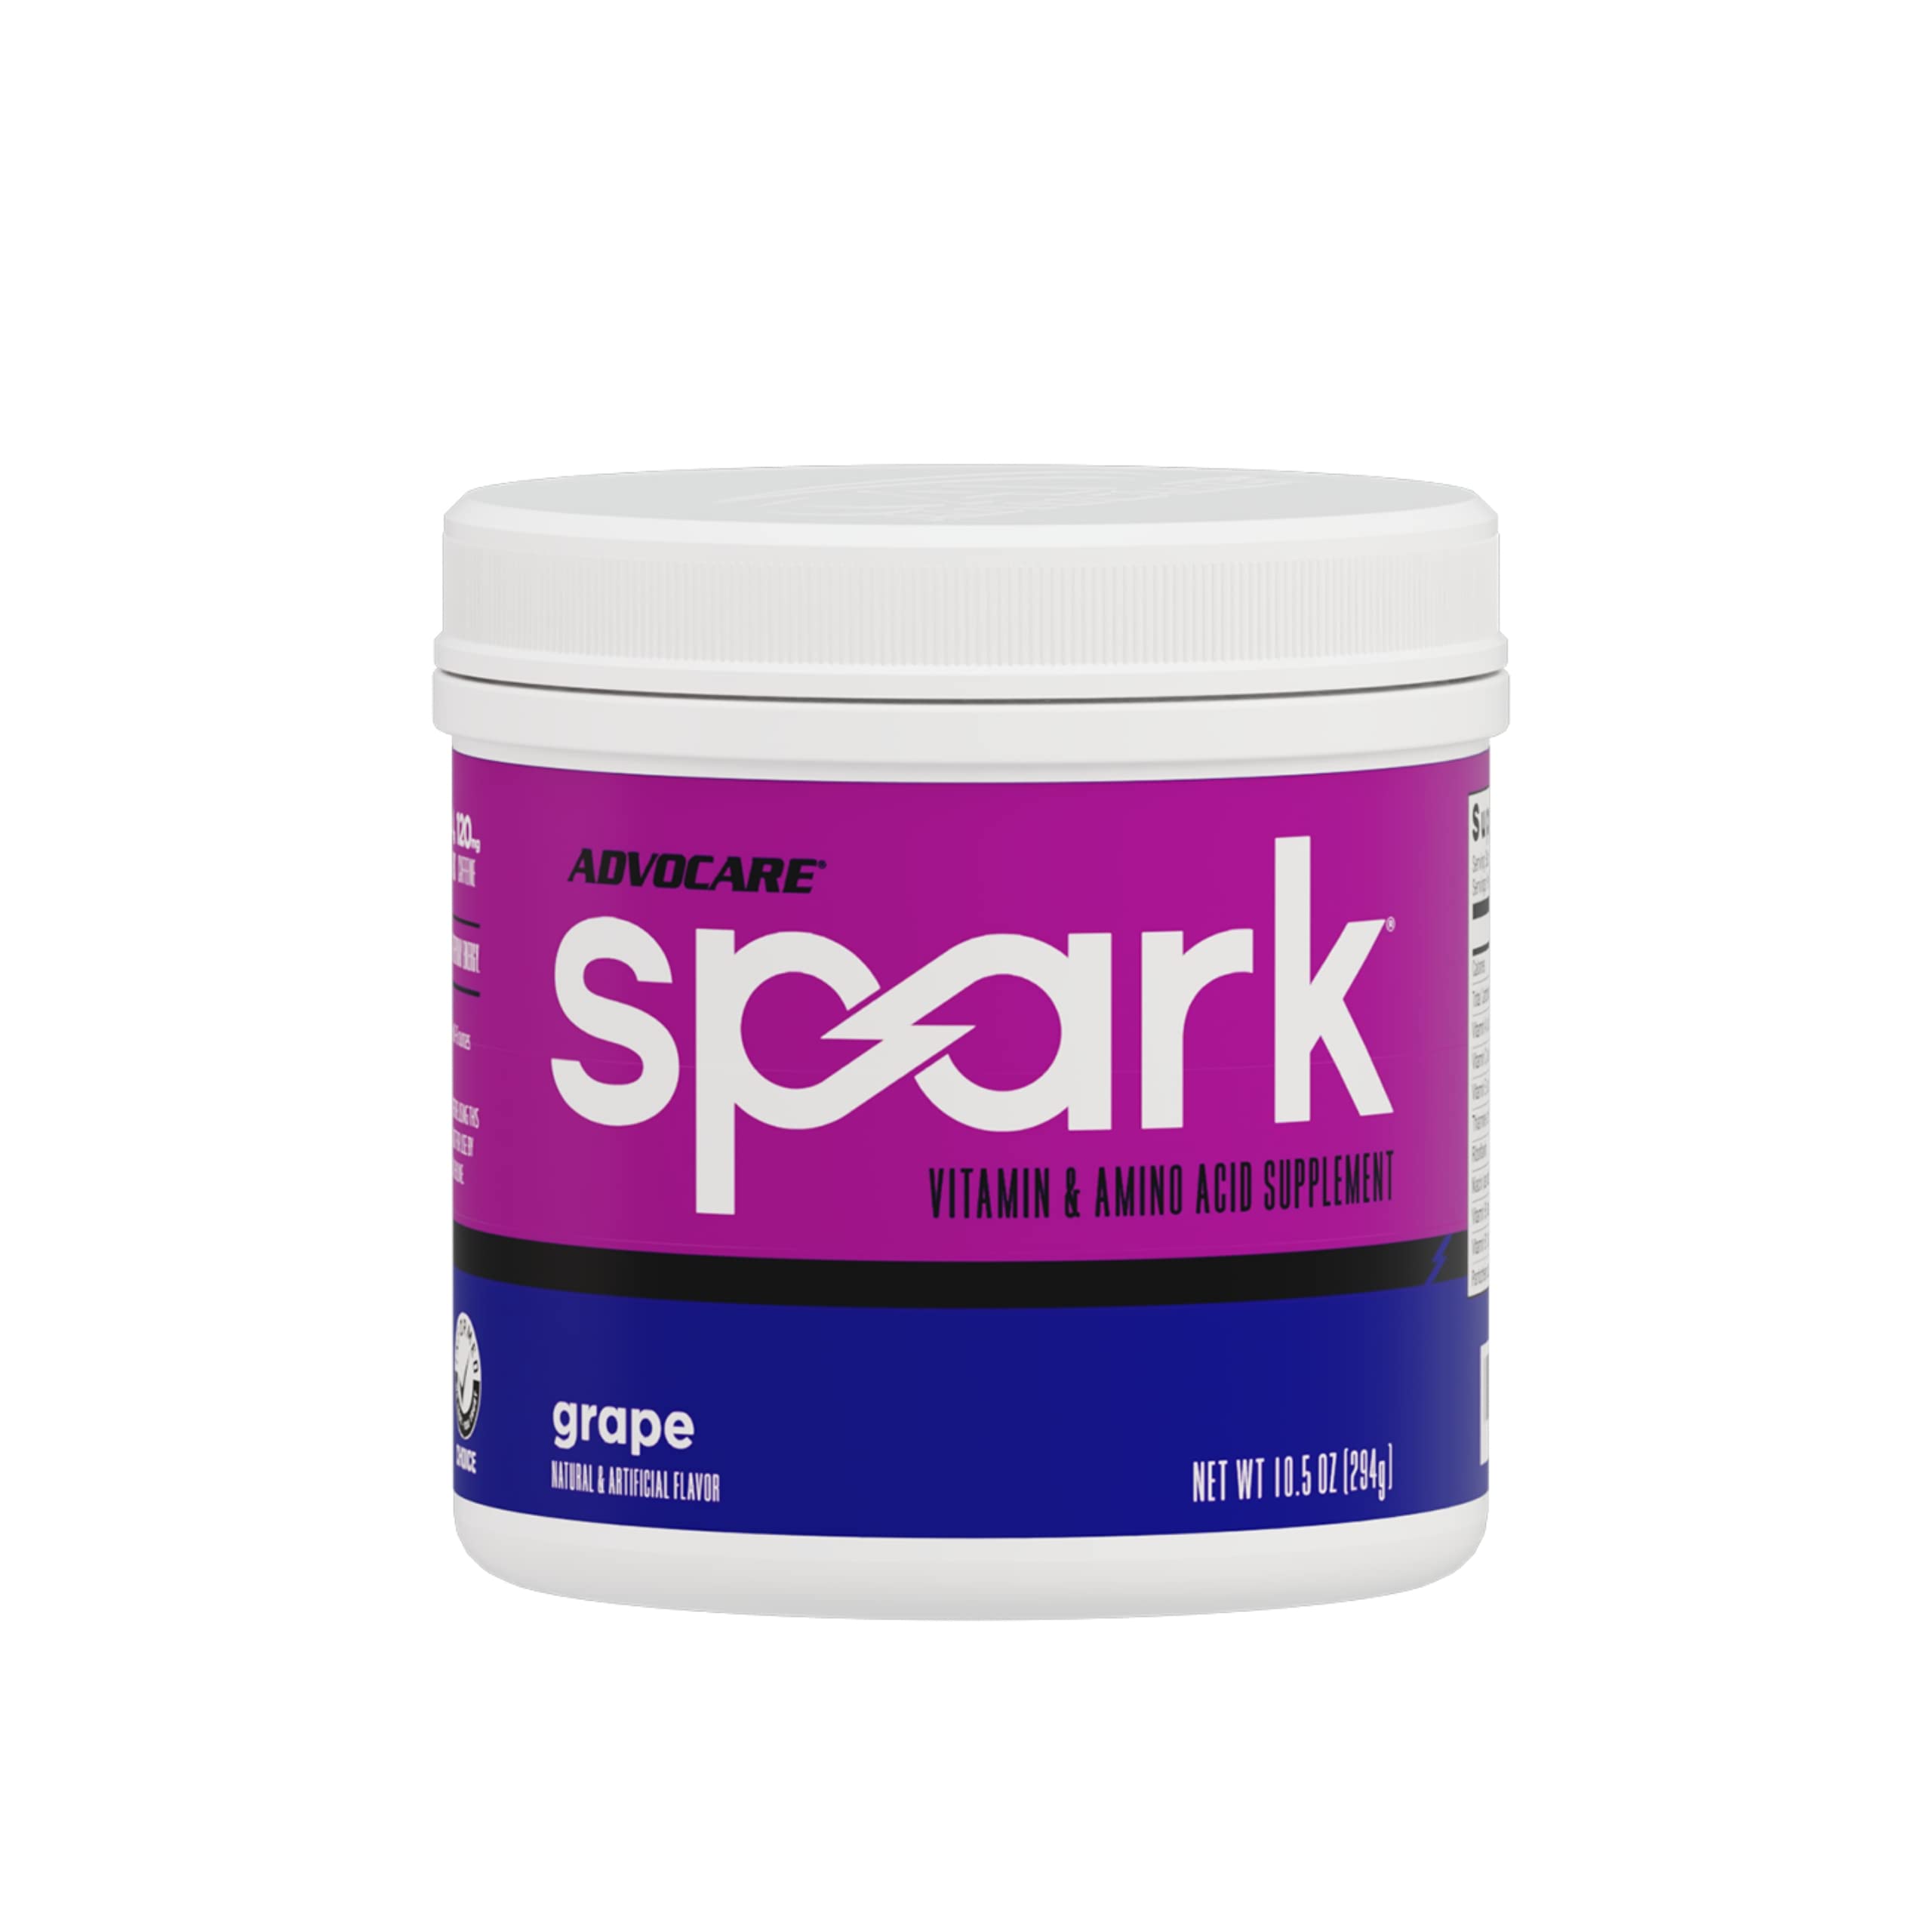 AdvoCare Spark Vitamin & Amino Acid Supplement - Focus and Energy Drink Mix - Grape - 10.5 oz